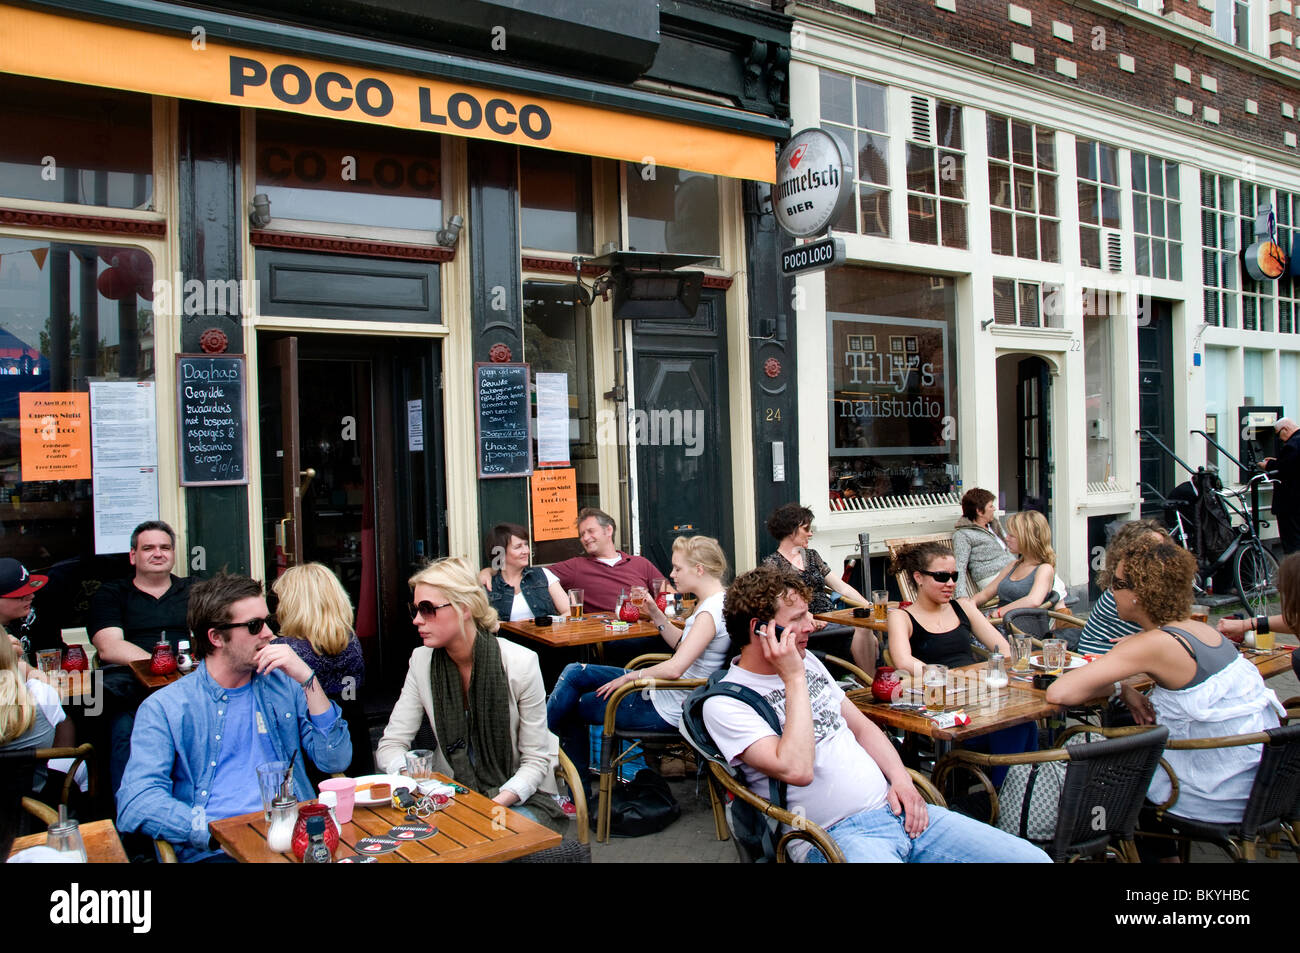 Poco Loco Amsterdam Pays-Bas pub café bar et restaurant Banque D'Images